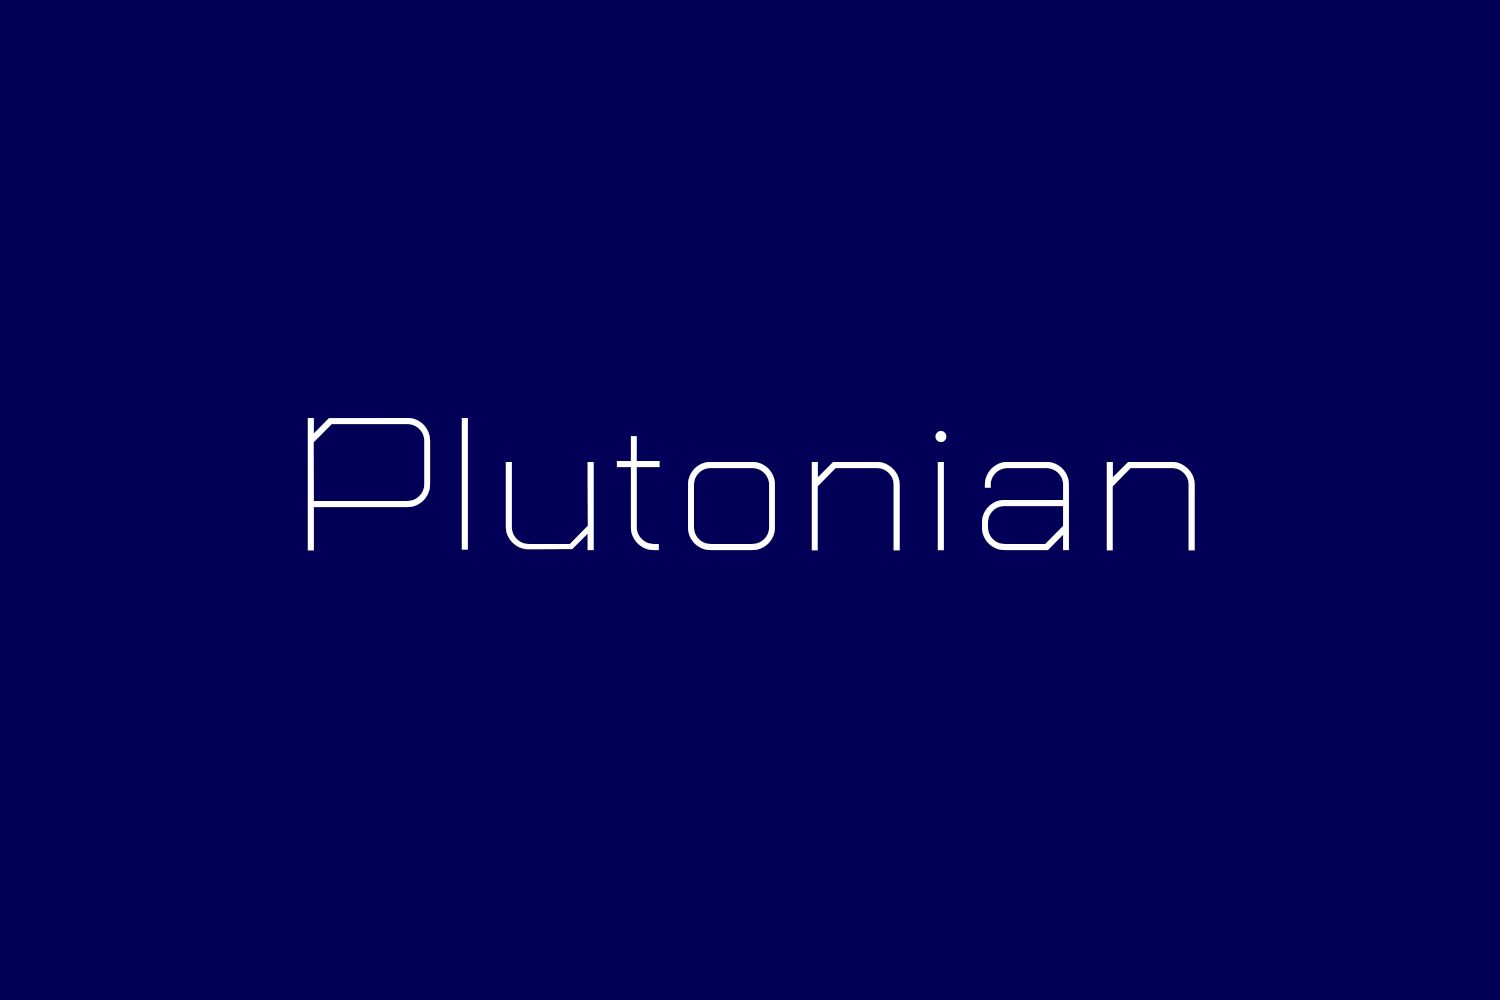 Plutonian Free Font